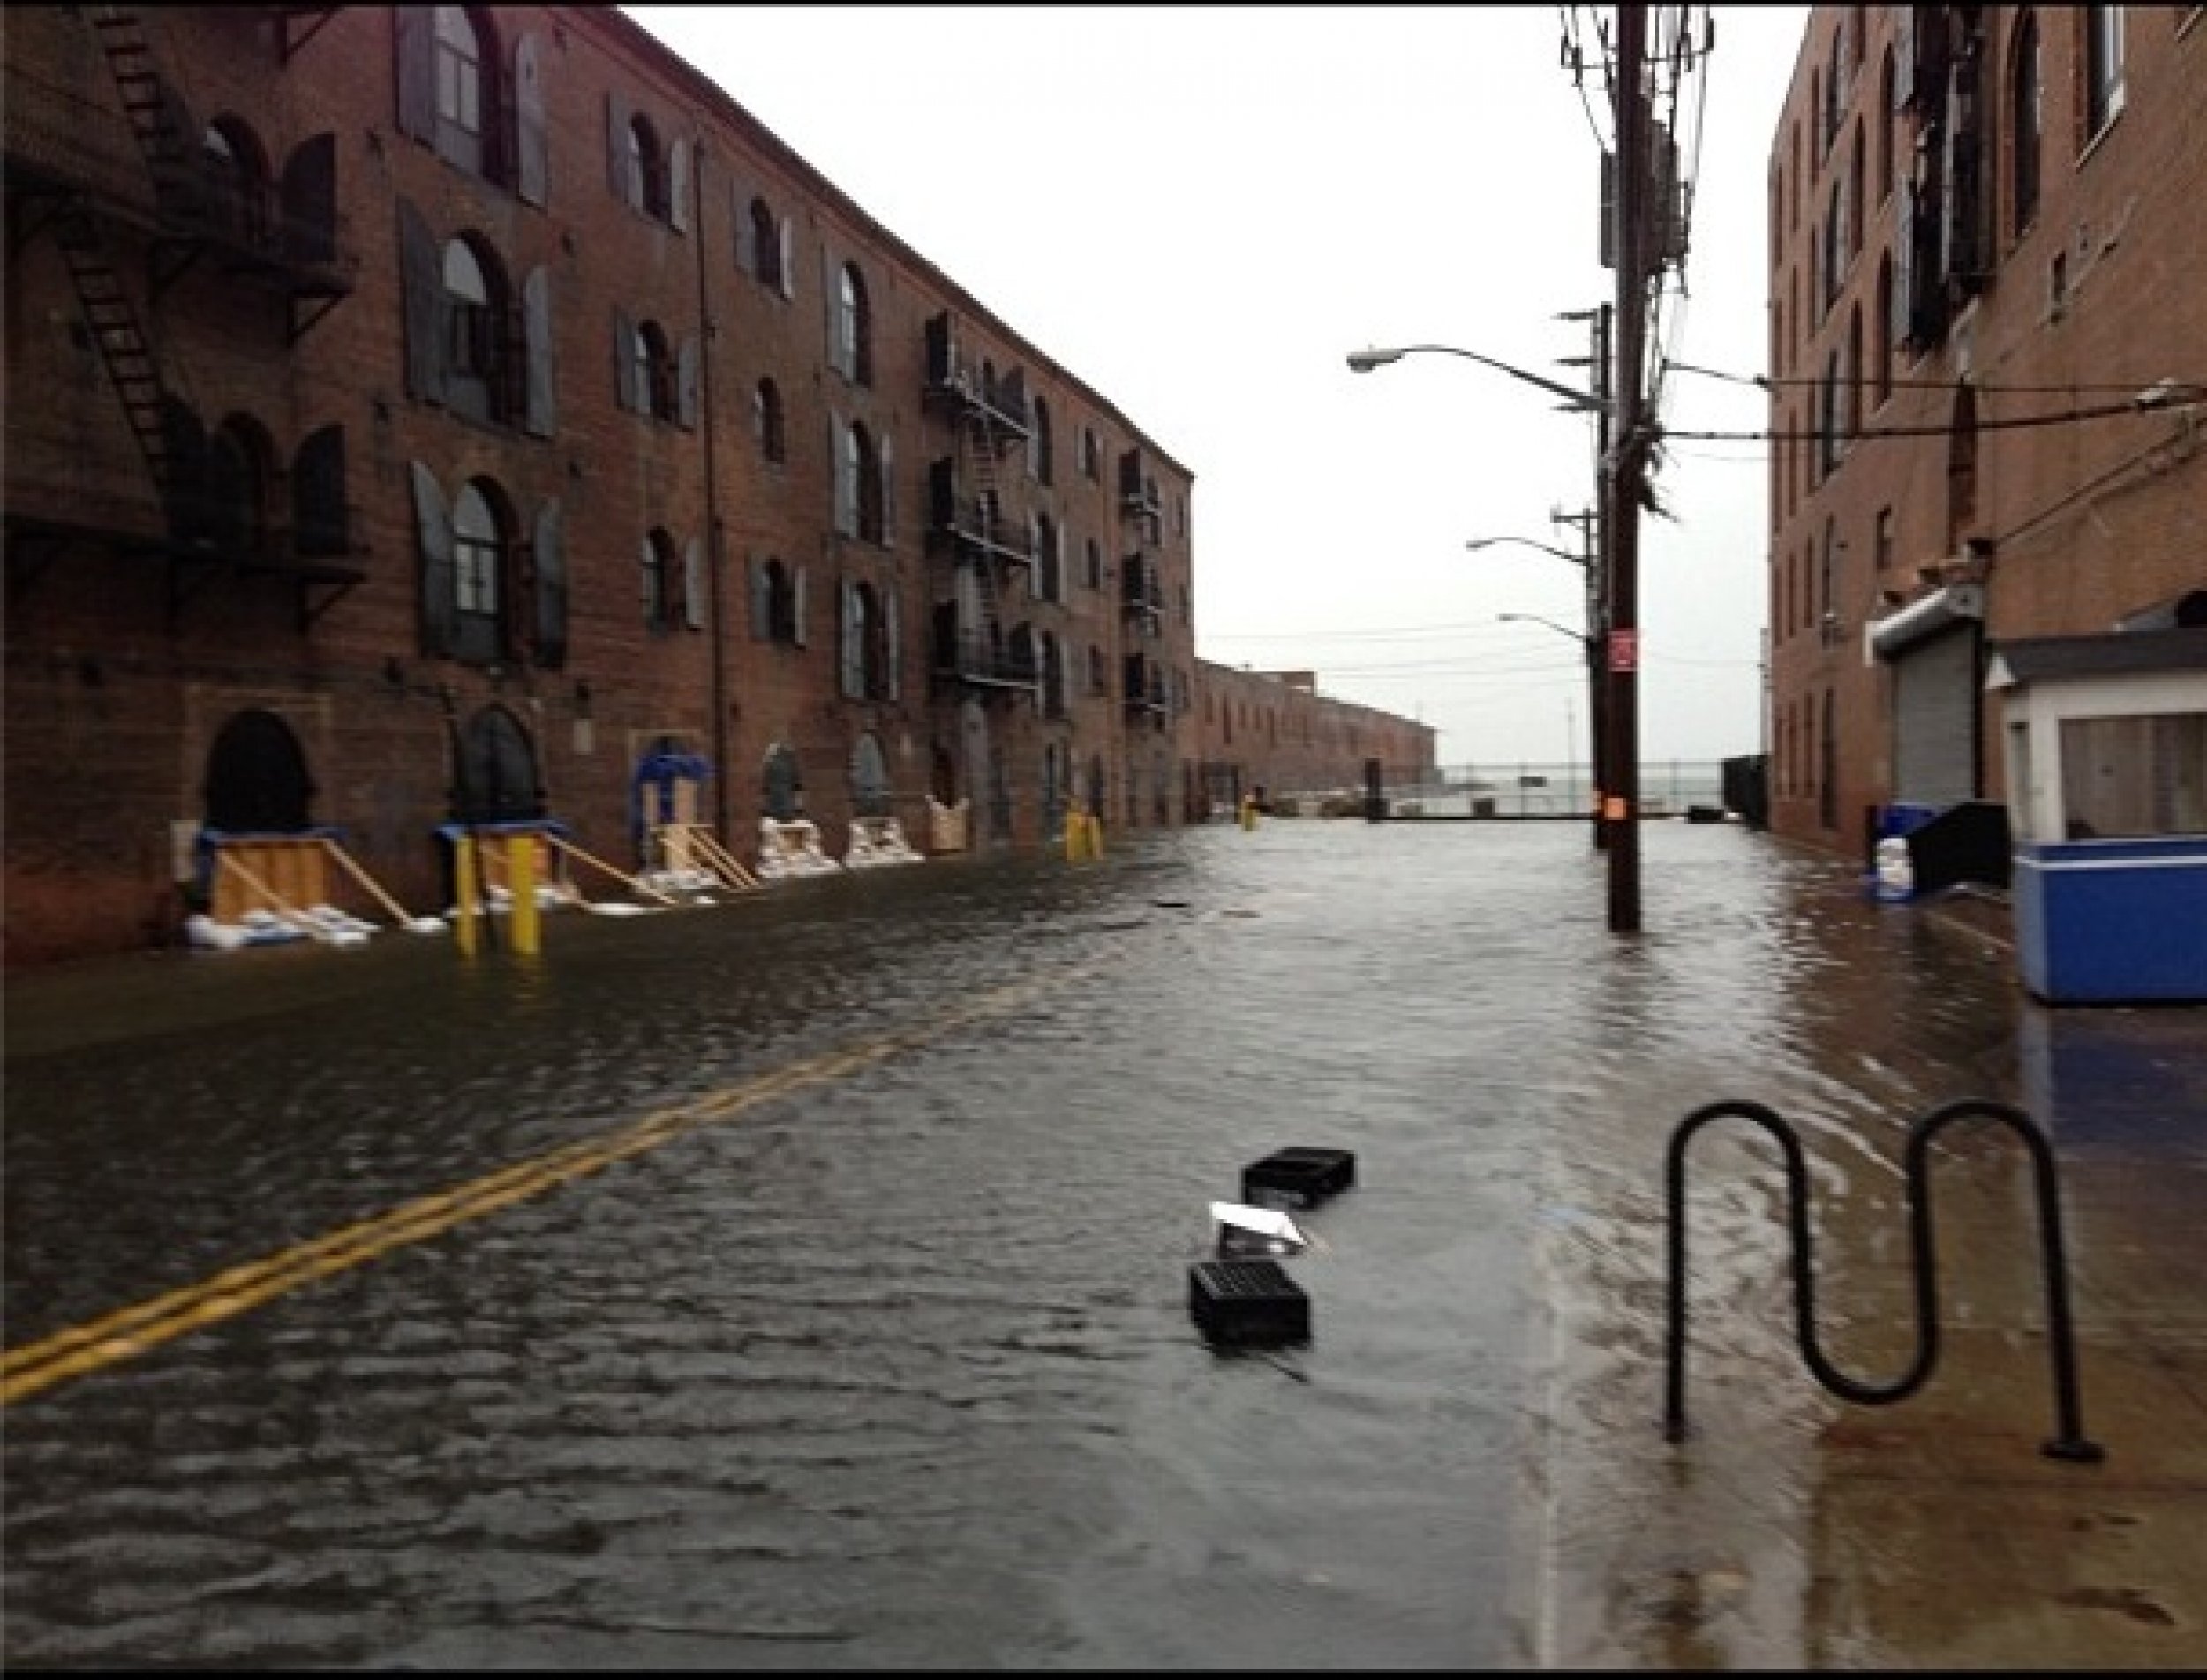 Hurricane Sandy In NYC